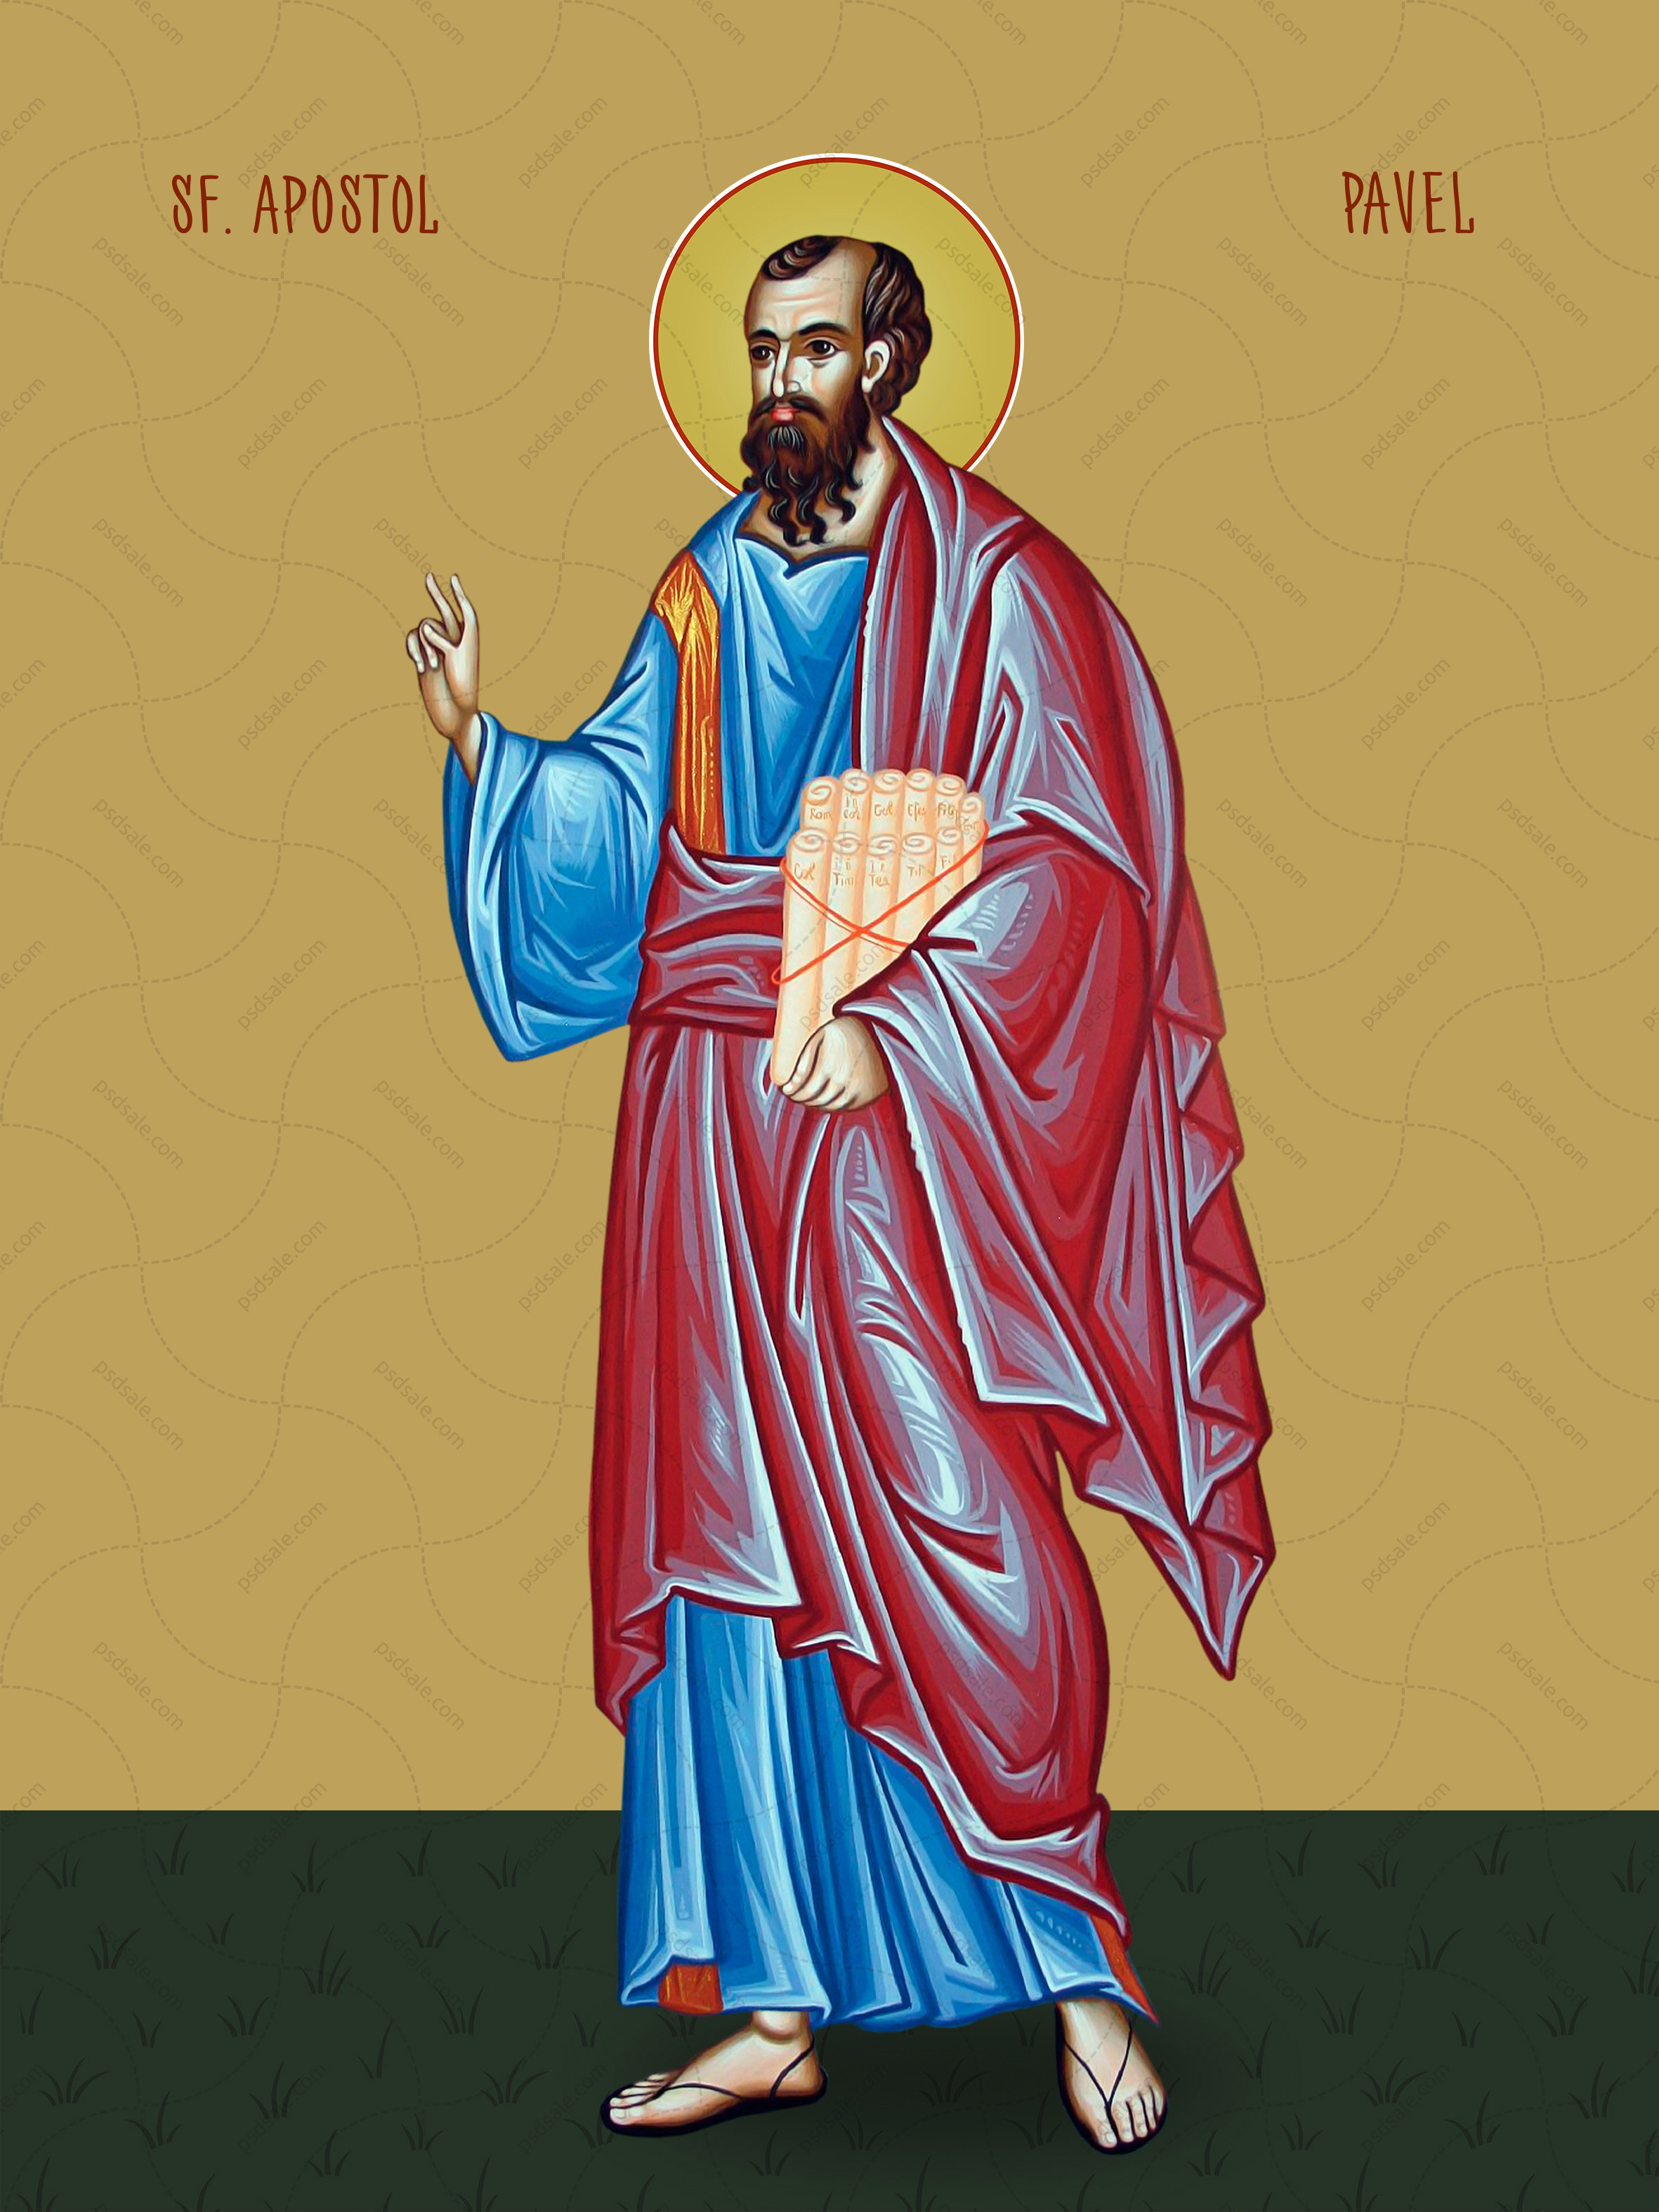 Paul, the apostle